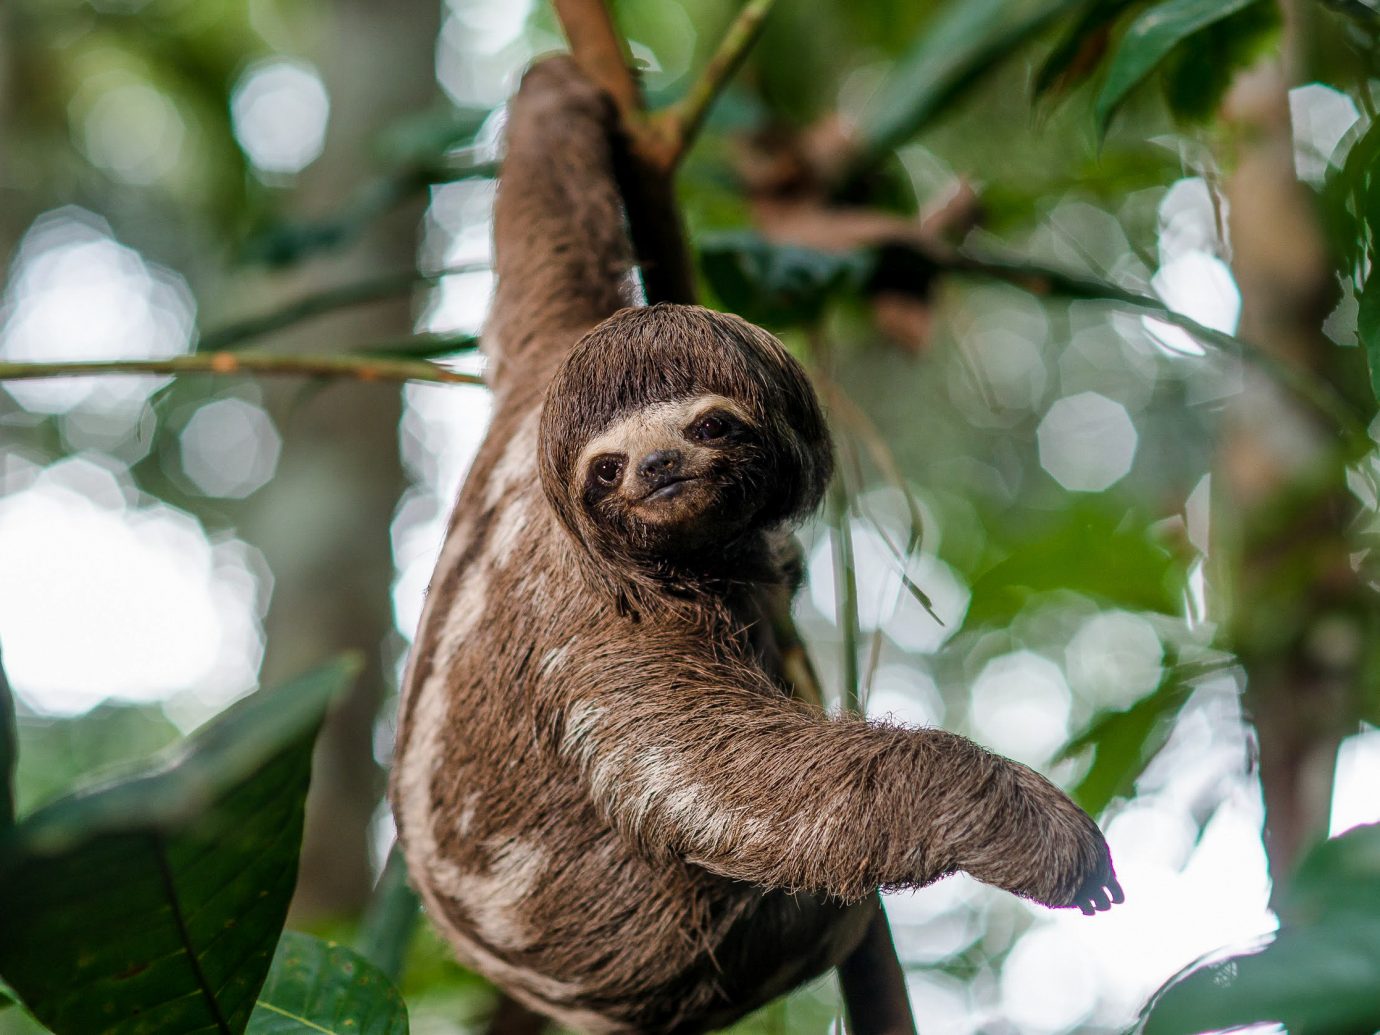 Cruise Travel Luxury Travel Outdoors + Adventure Travel Tips Trip Ideas tree sloth animal mammal outdoor fauna three toed sloth terrestrial animal leaf organism rainforest Jungle branch Wildlife snout